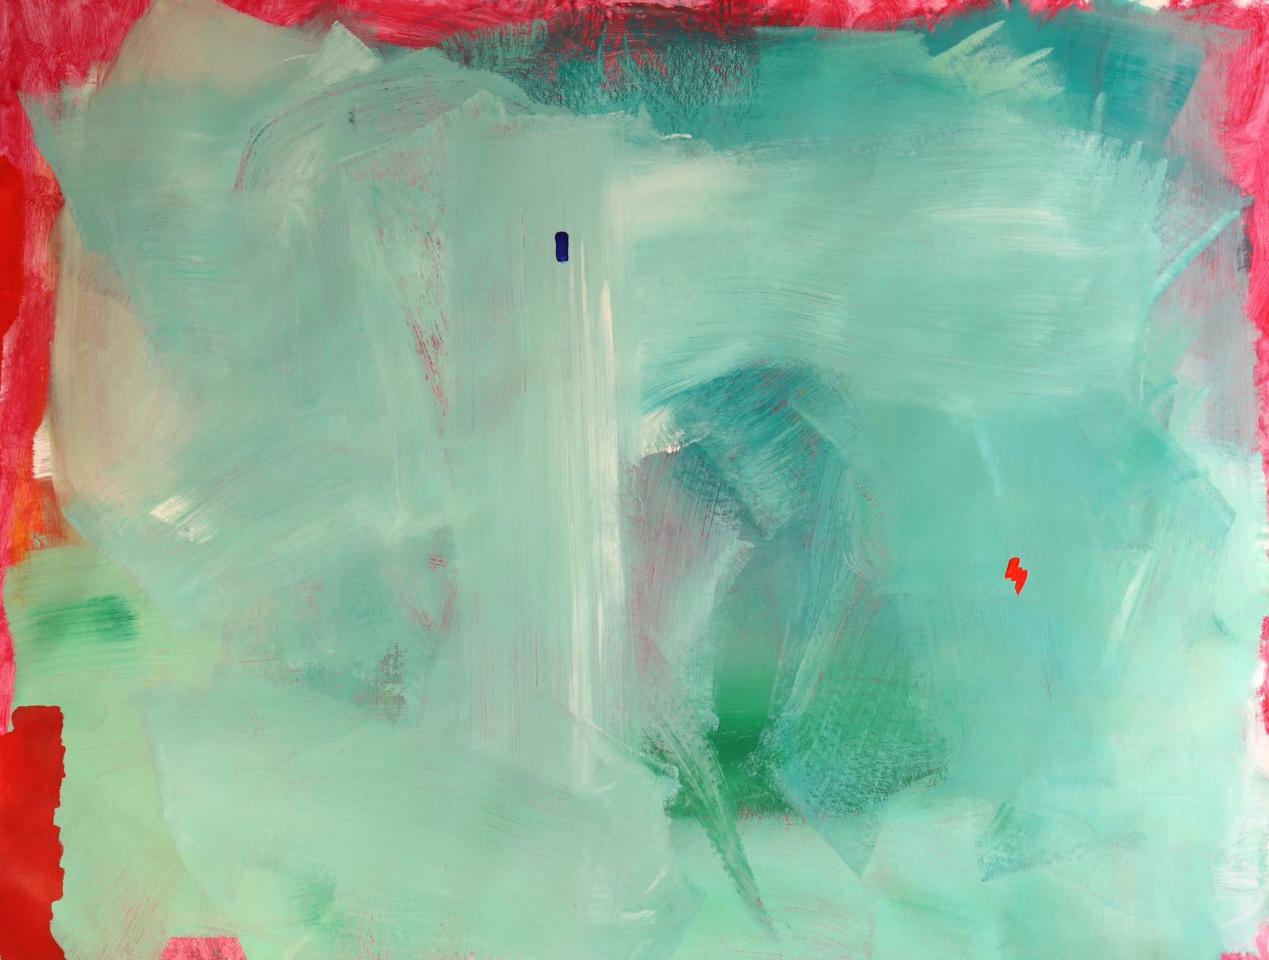 Sam Samiee, Untitled (Green abstract), 2019